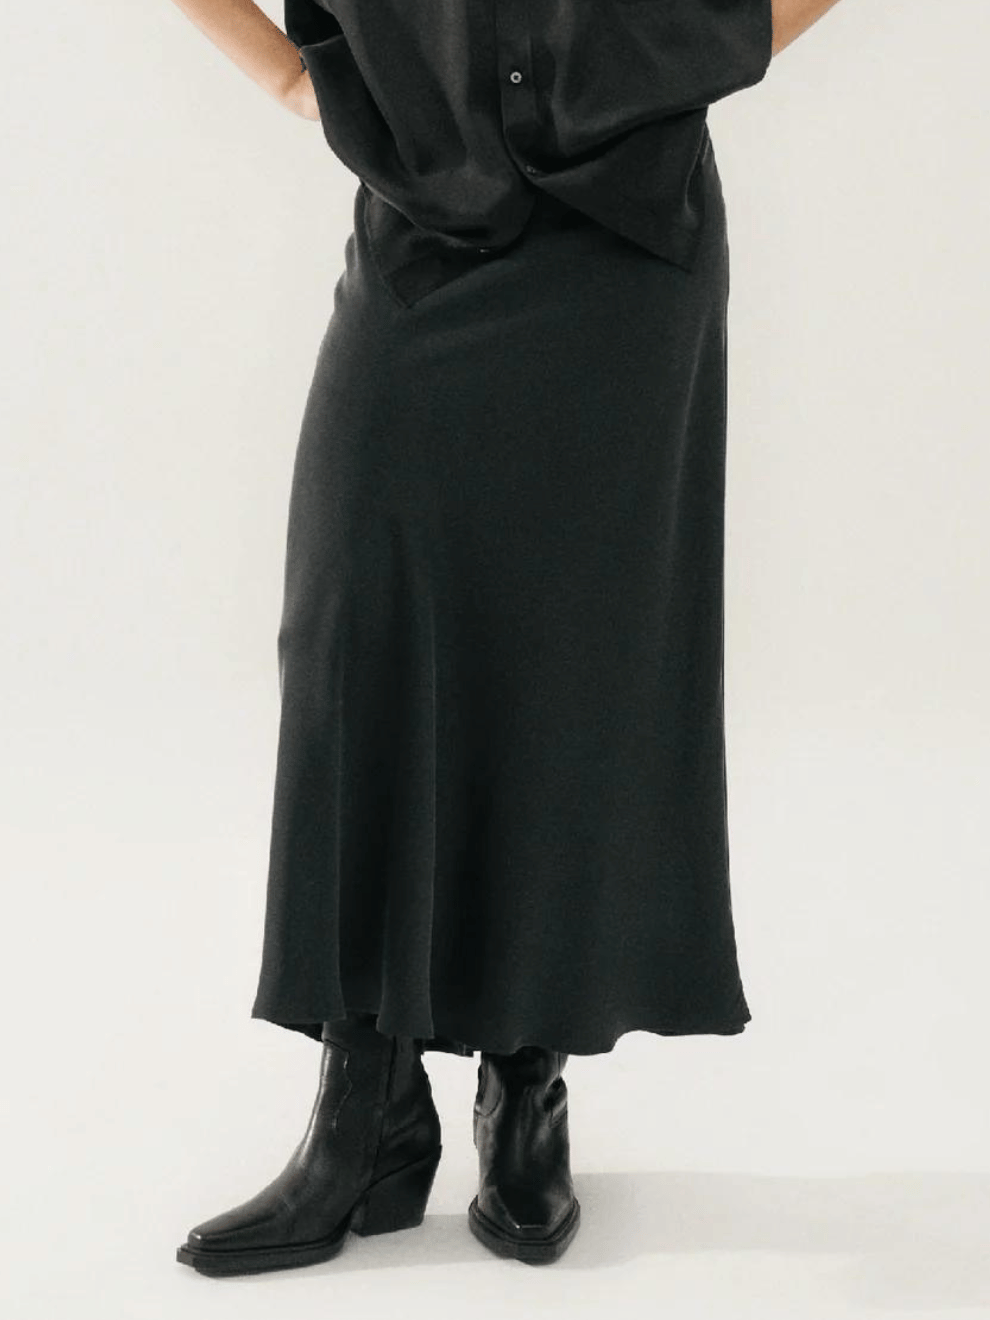 Long Bias Cut Skirt in Black